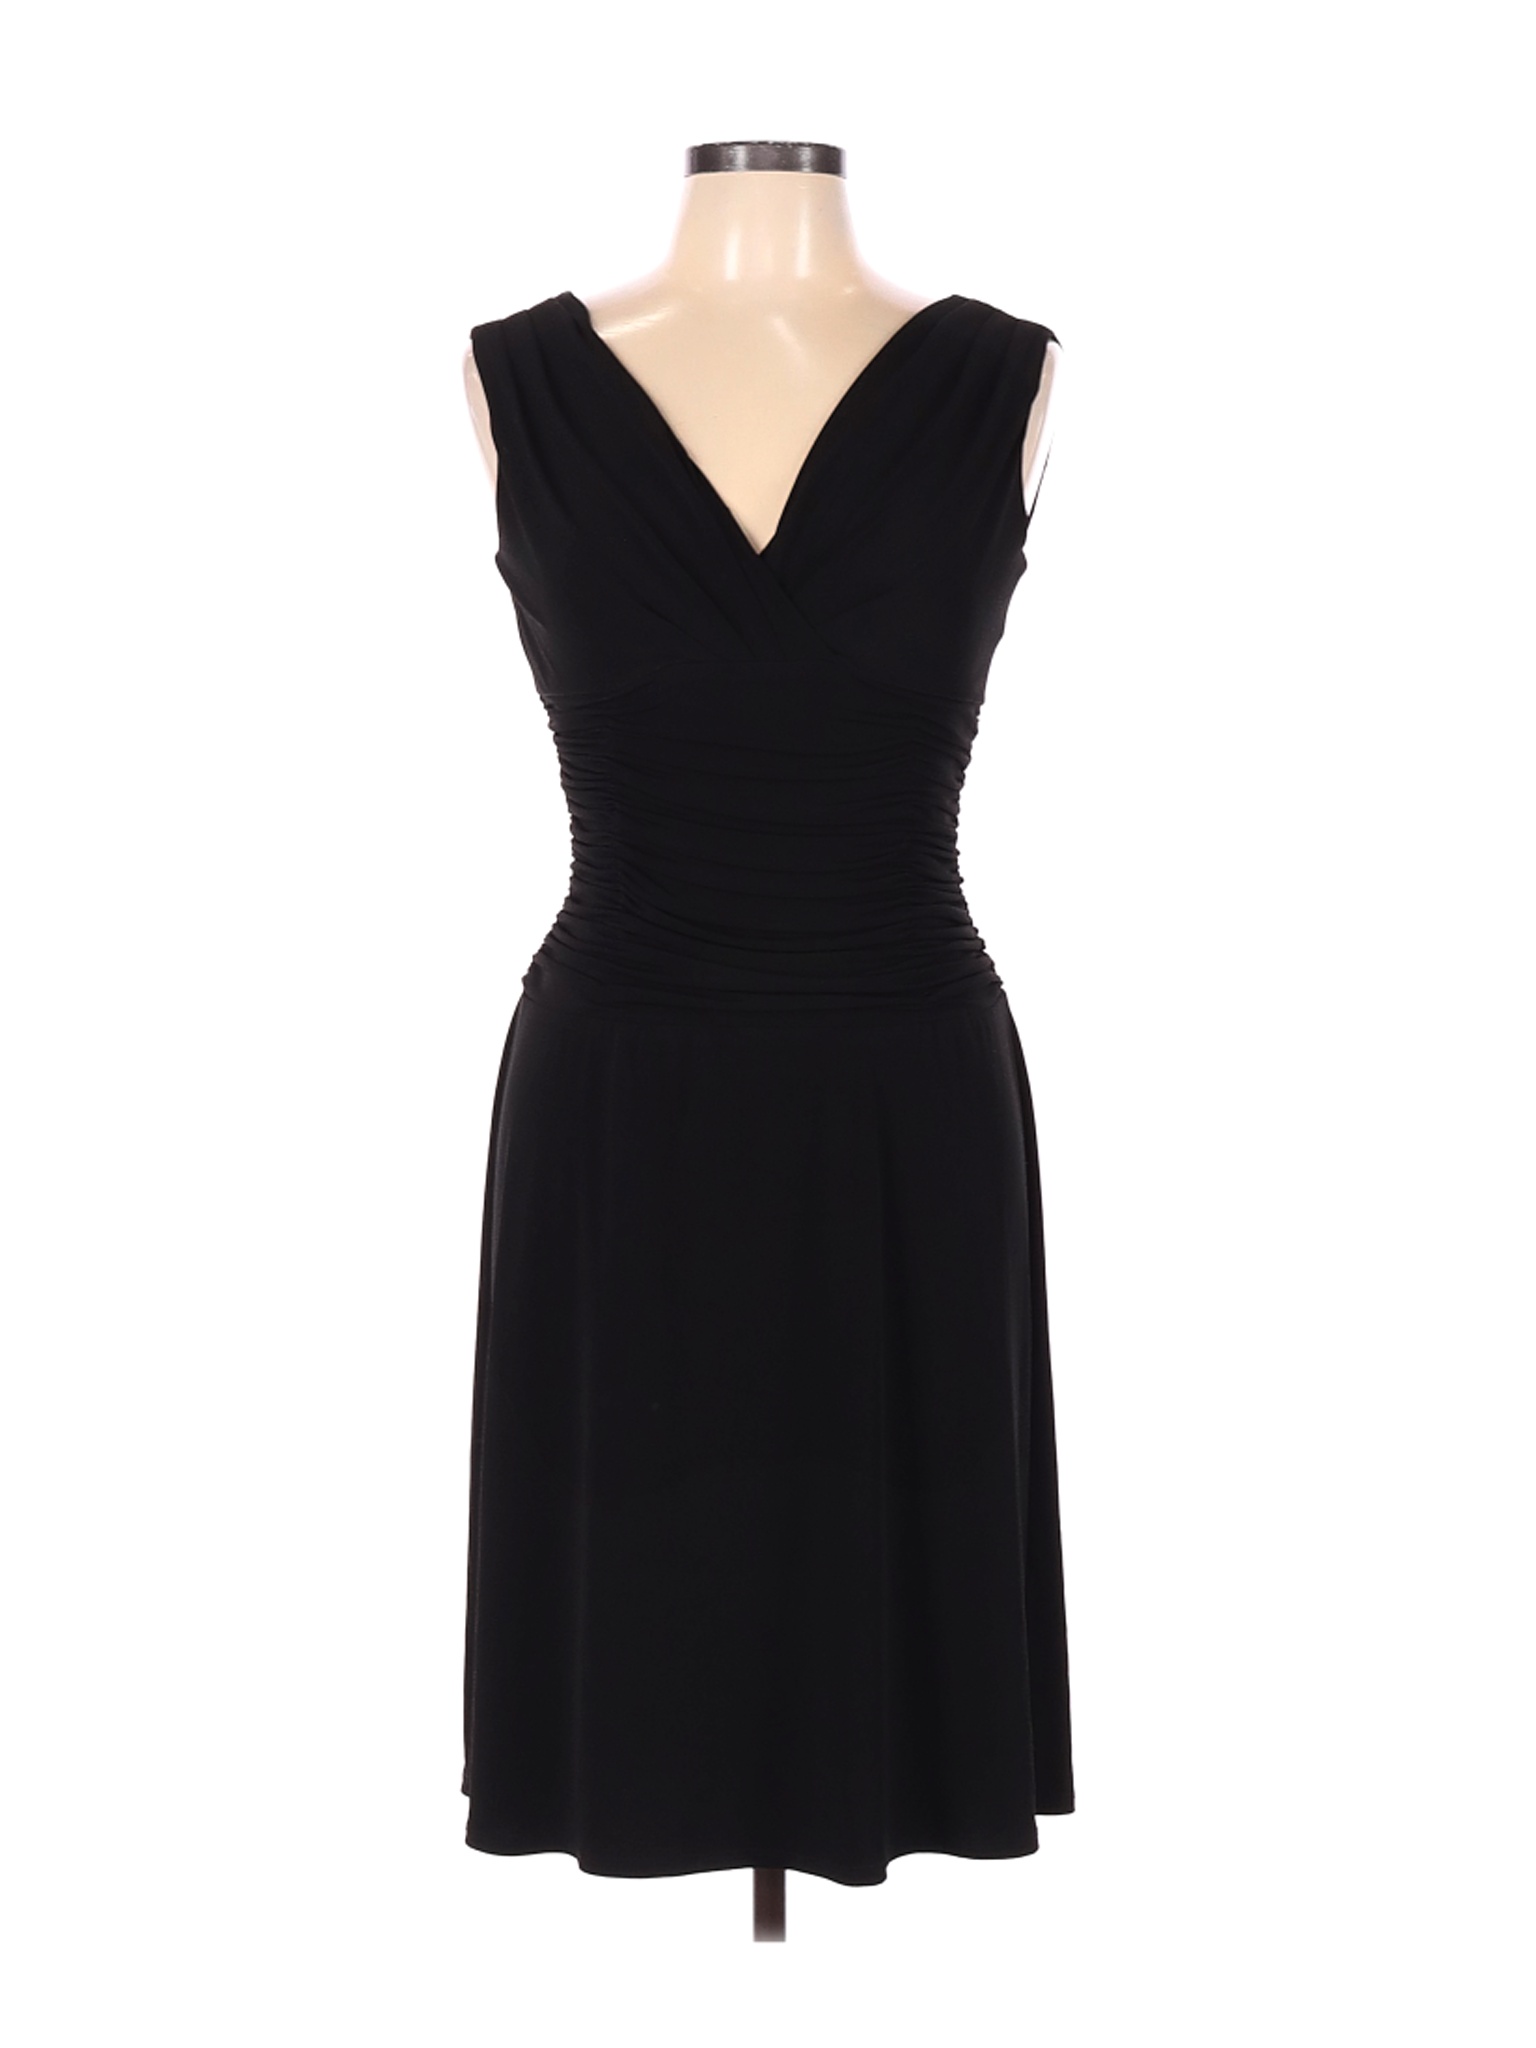 DressBarn Women Black Cocktail Dress 10 | eBay